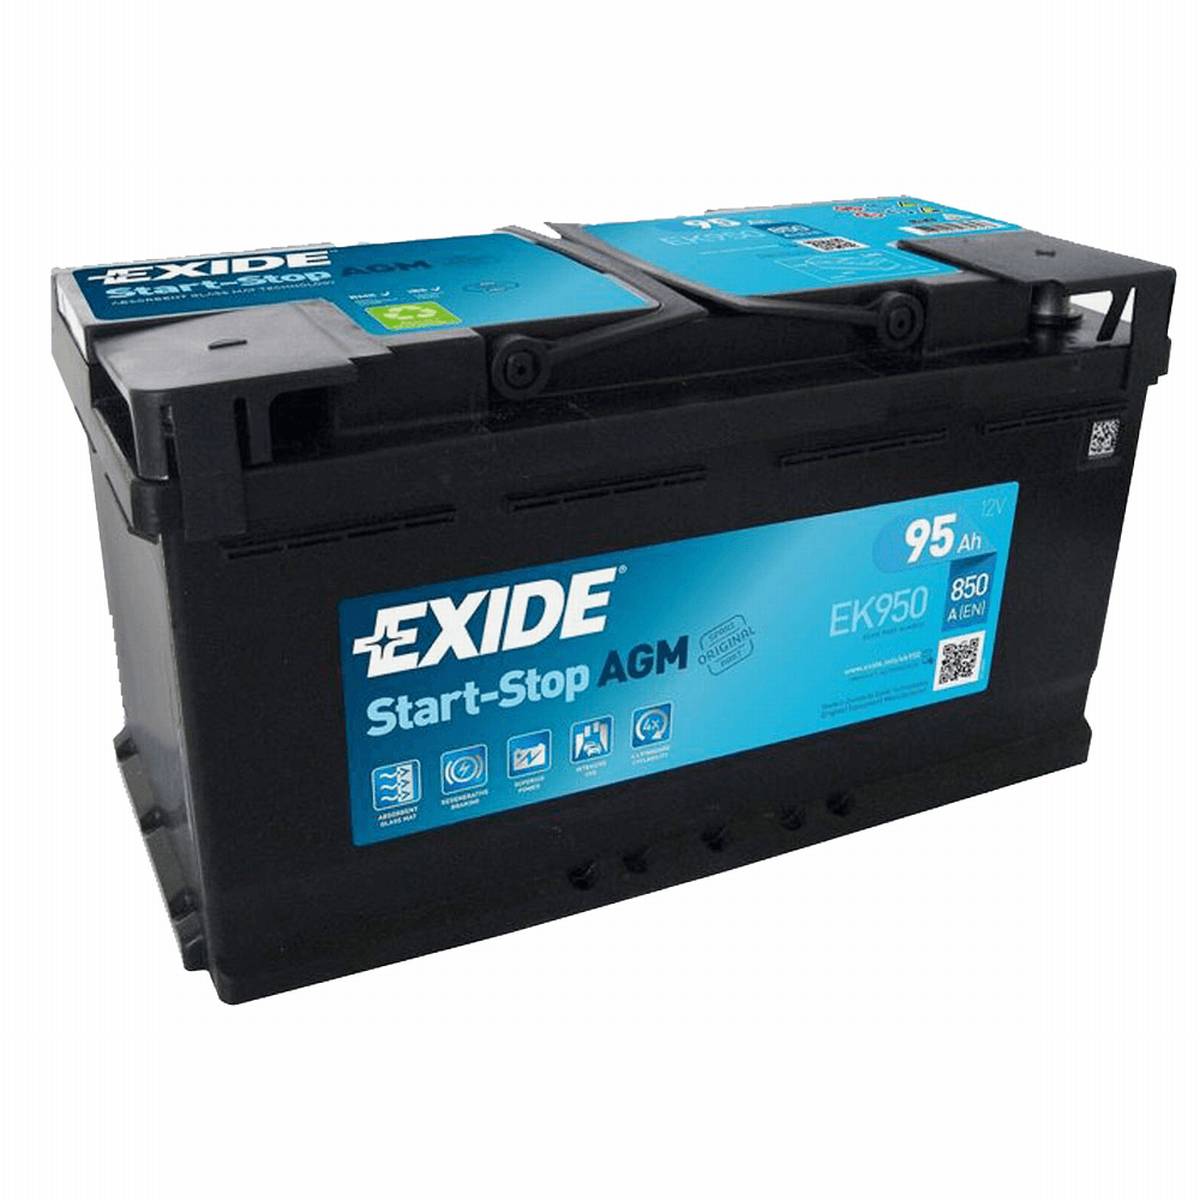 Exide EK950 Start-Stop AGM 12V 95Ah 850A batteria auto